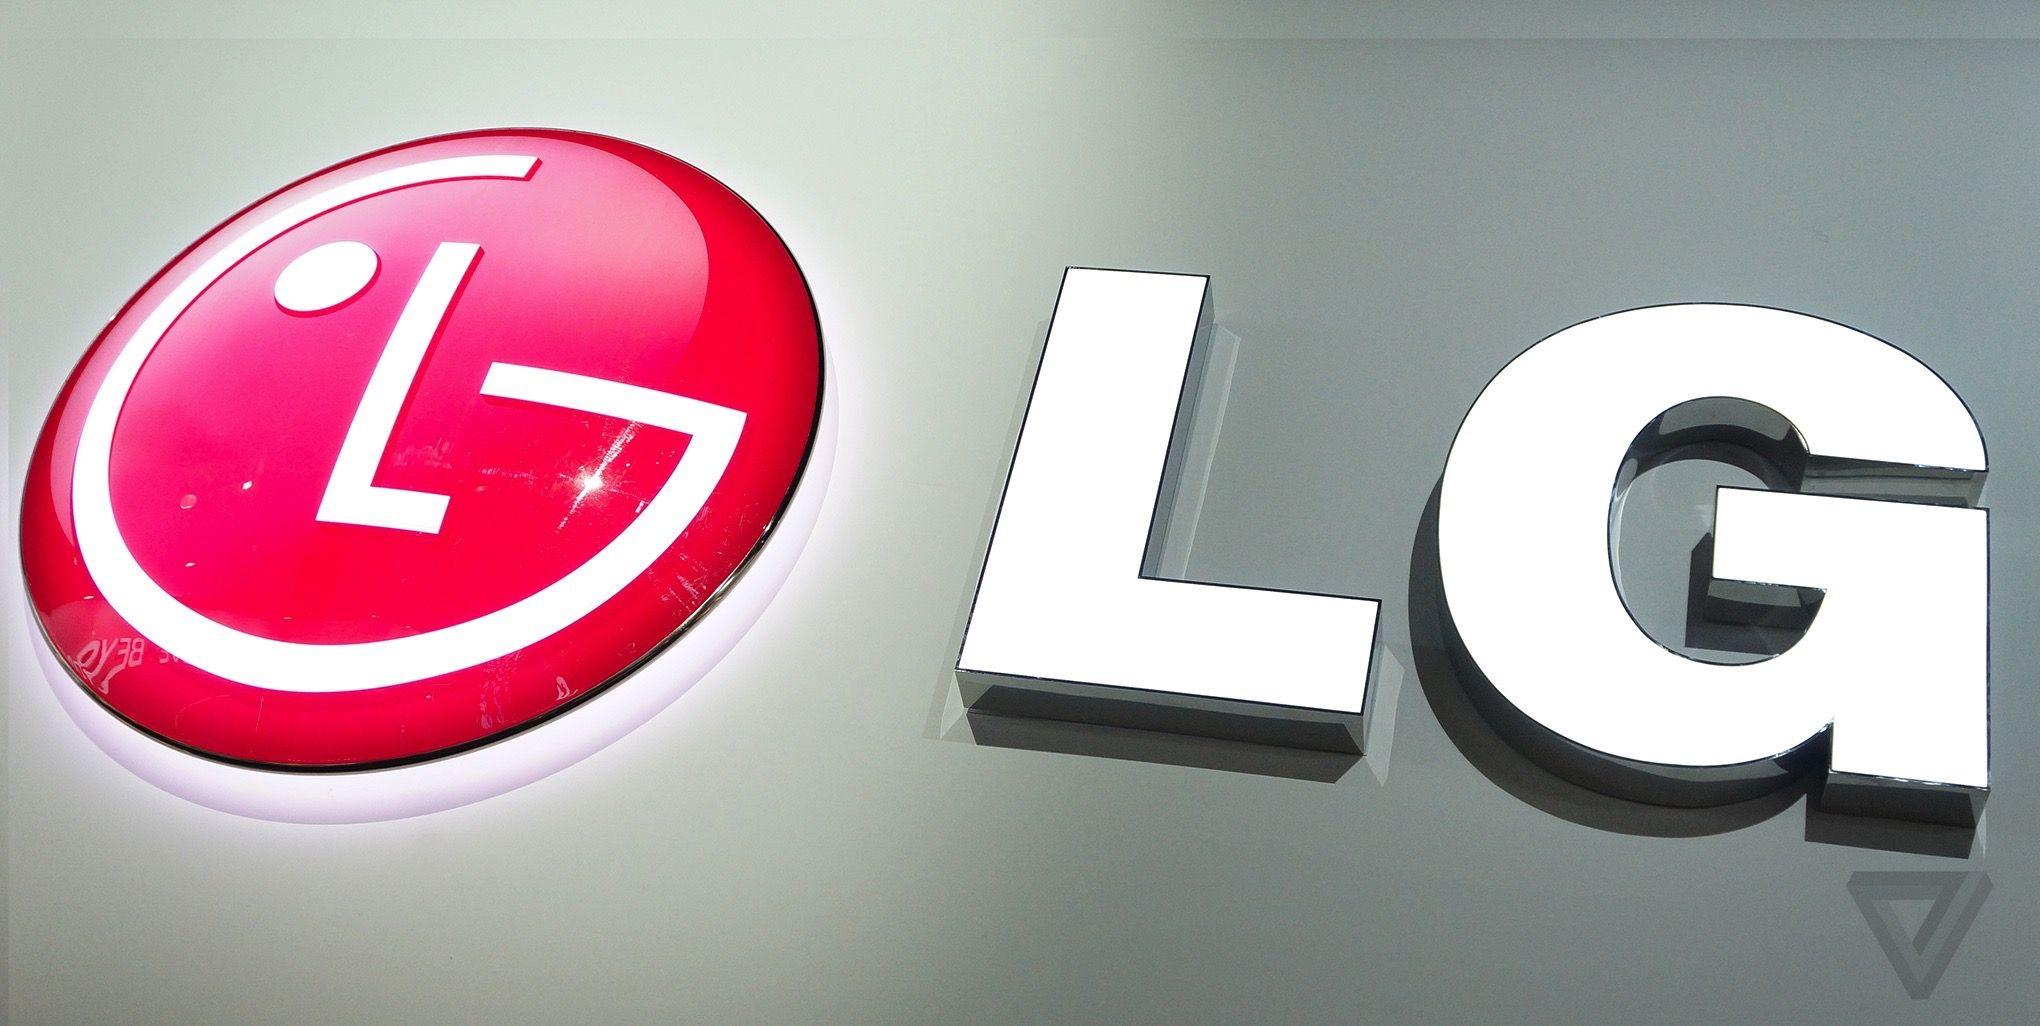 LG Logo - LG has quietly updated its logo